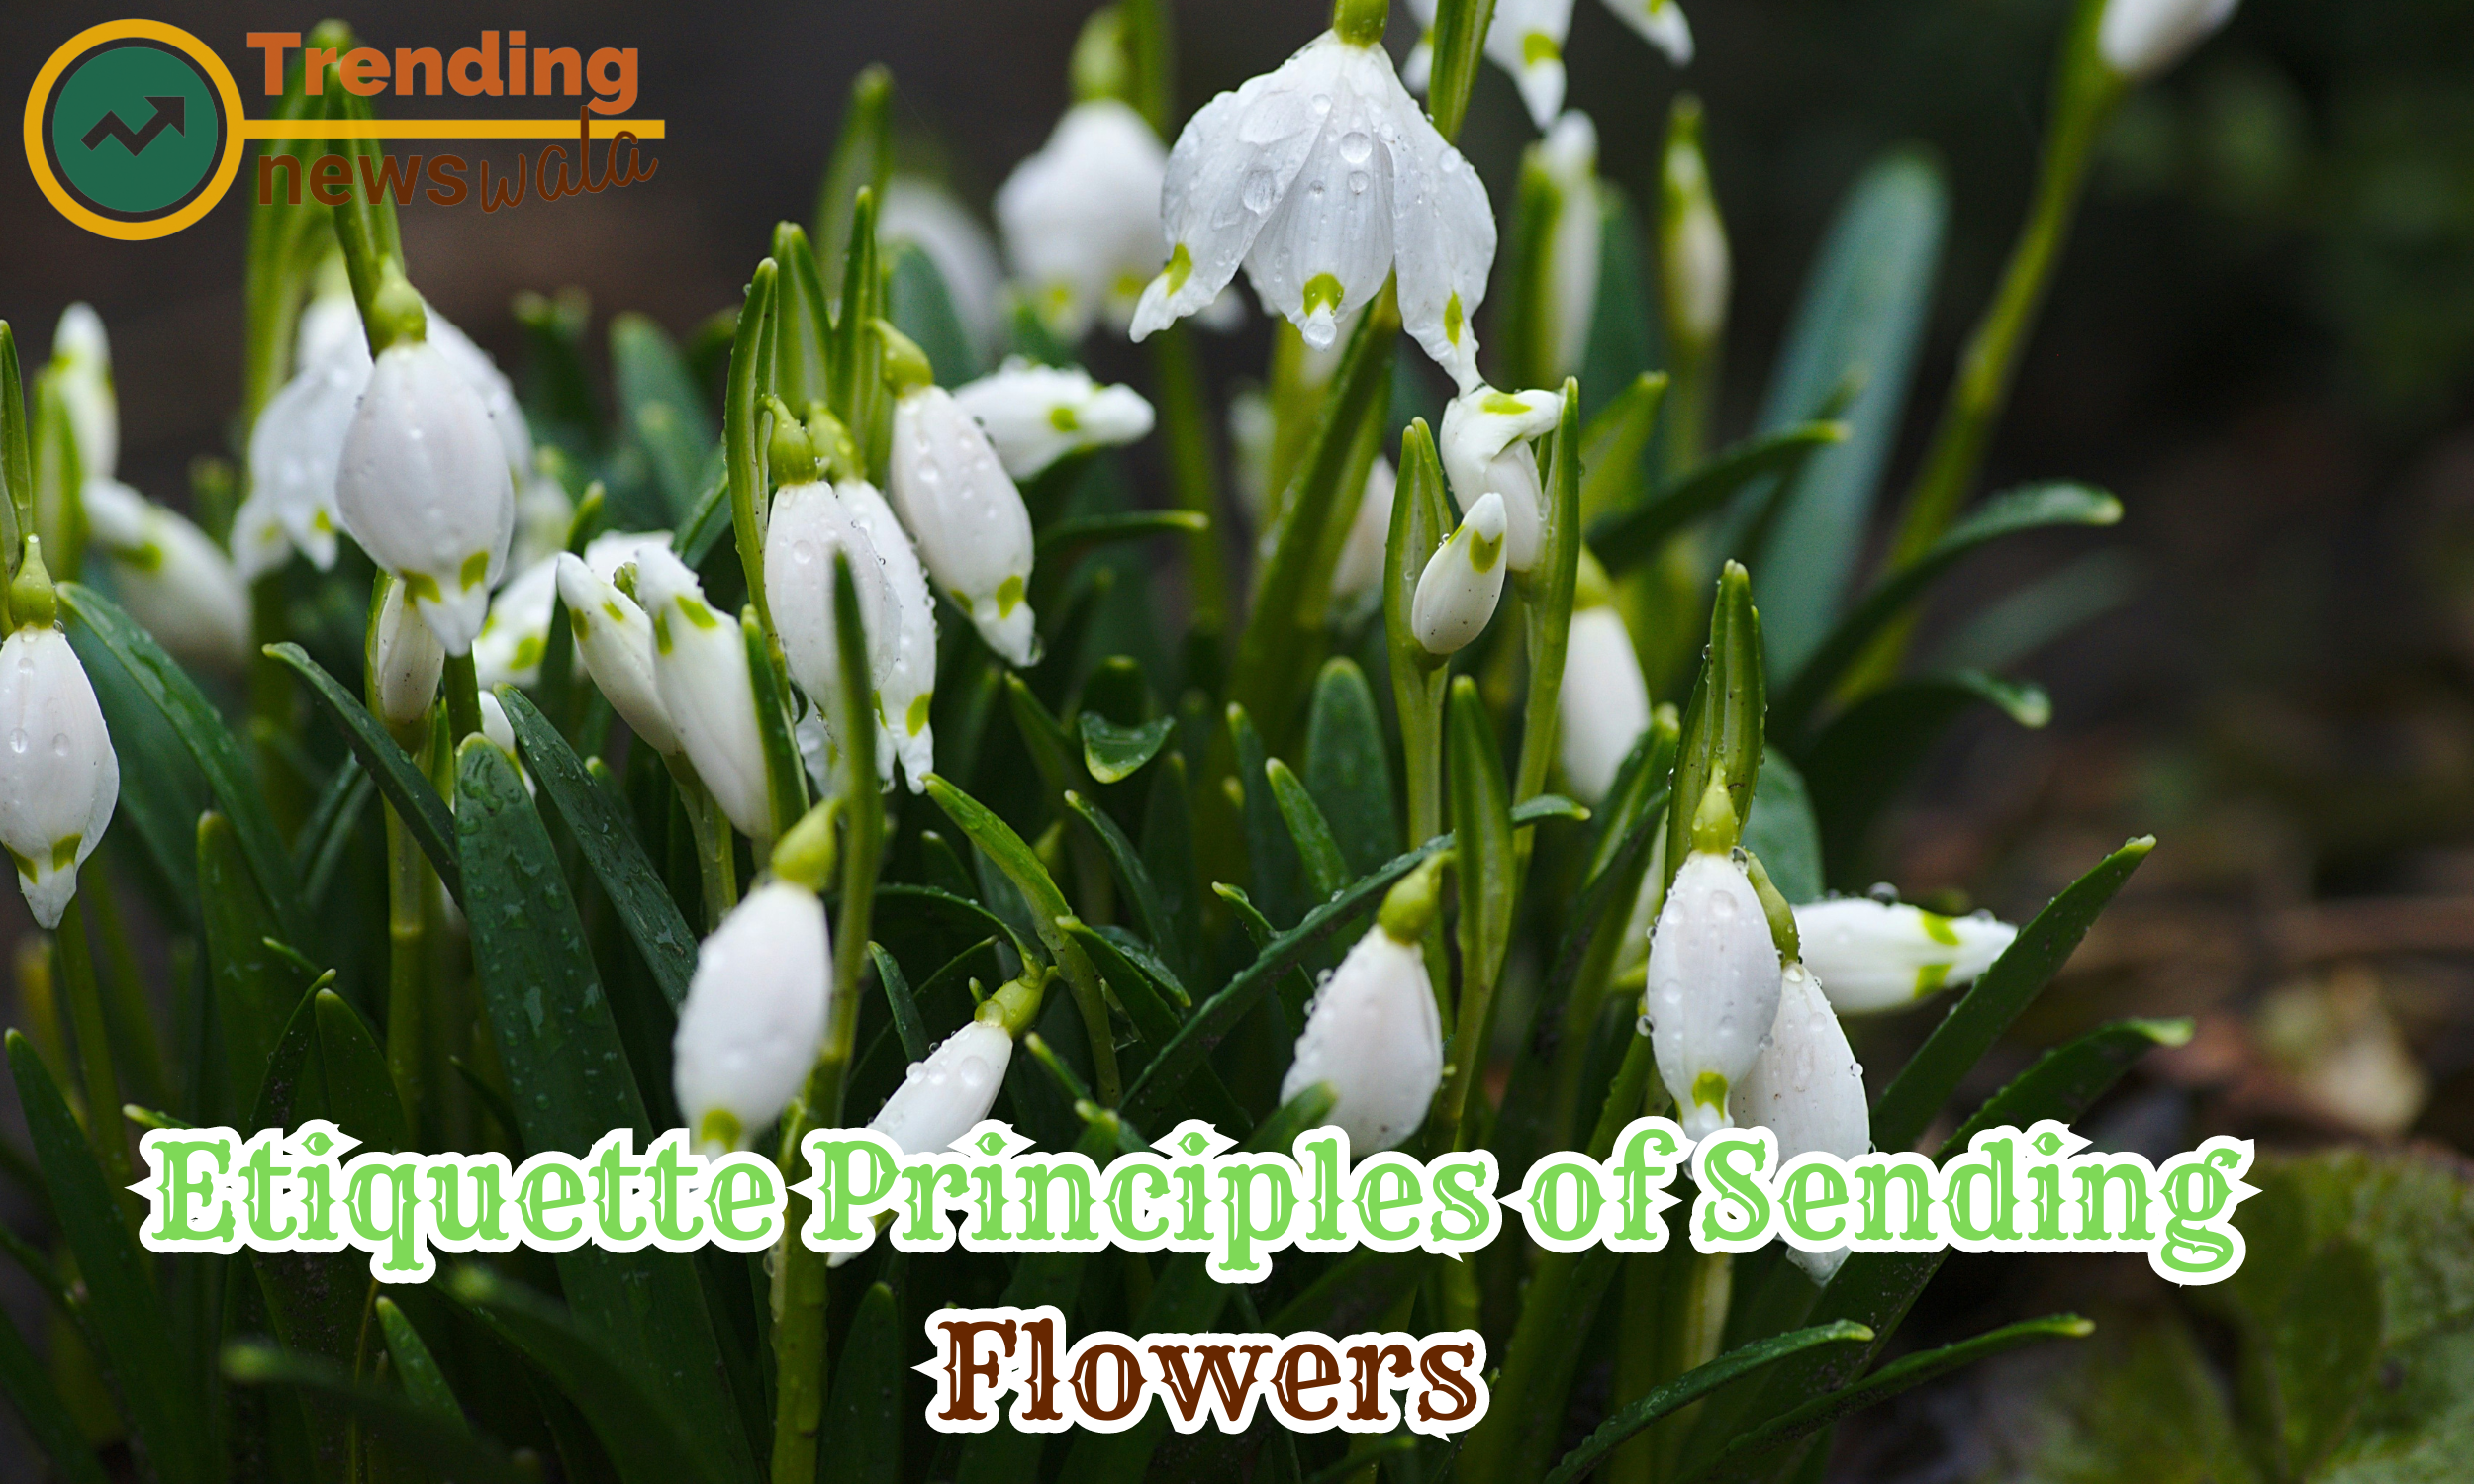 Etiquette Principles of Sending Flowers